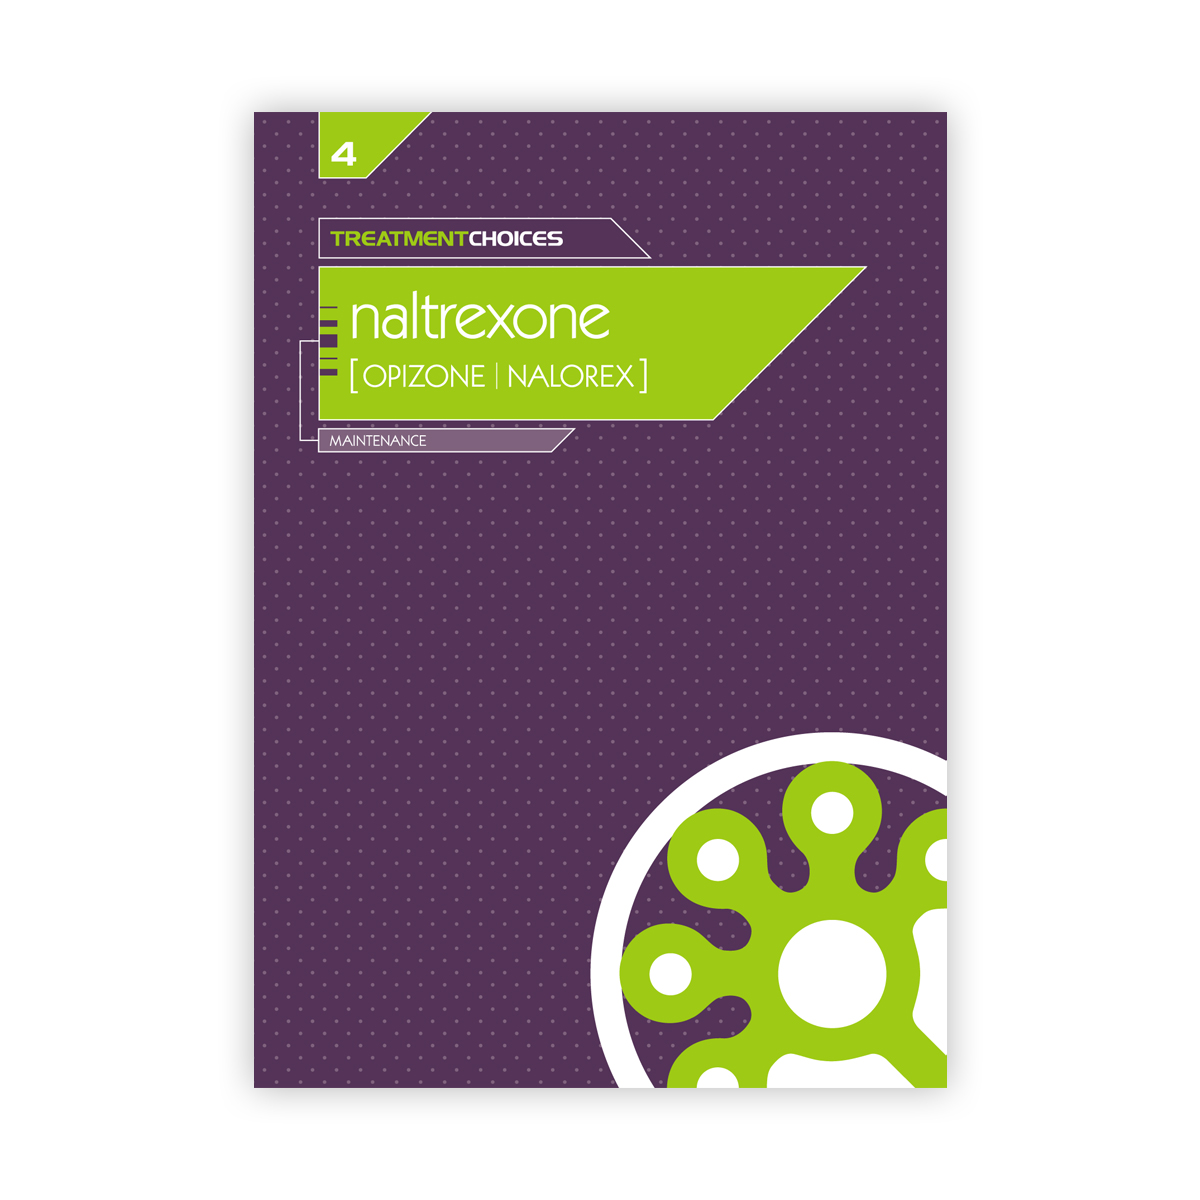 Treatment Choices 4: Naltrexone